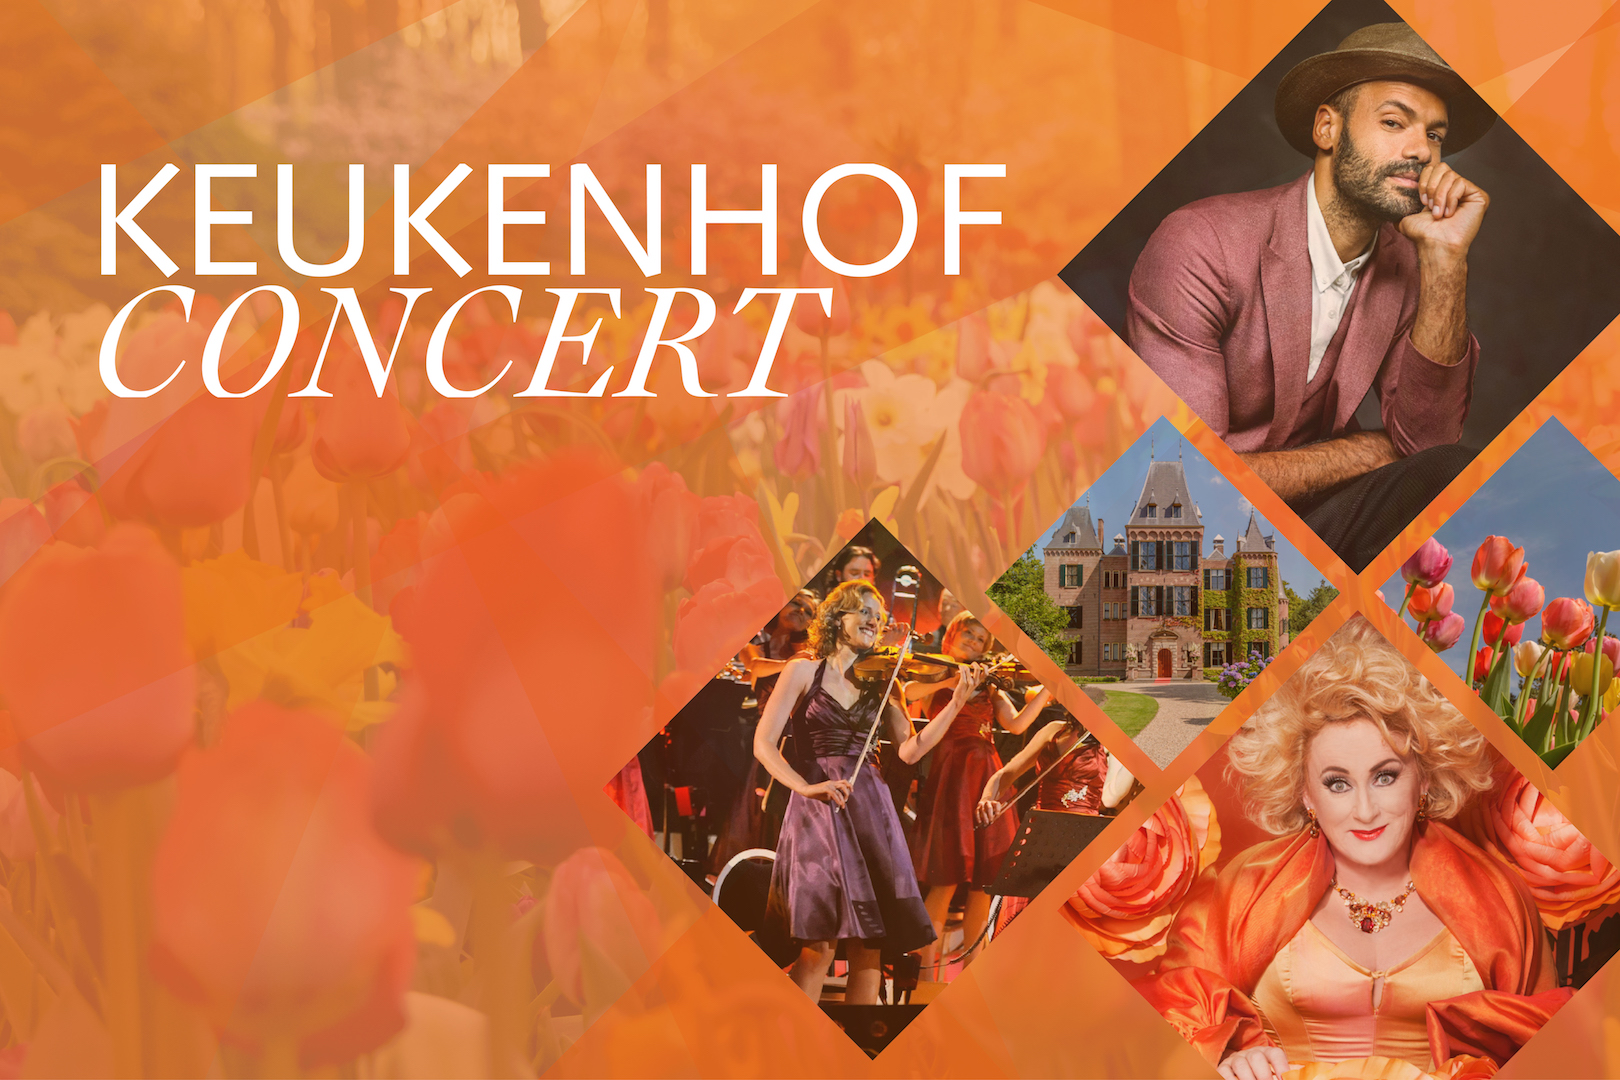 Keukenhof Concert Visuals5.jpg